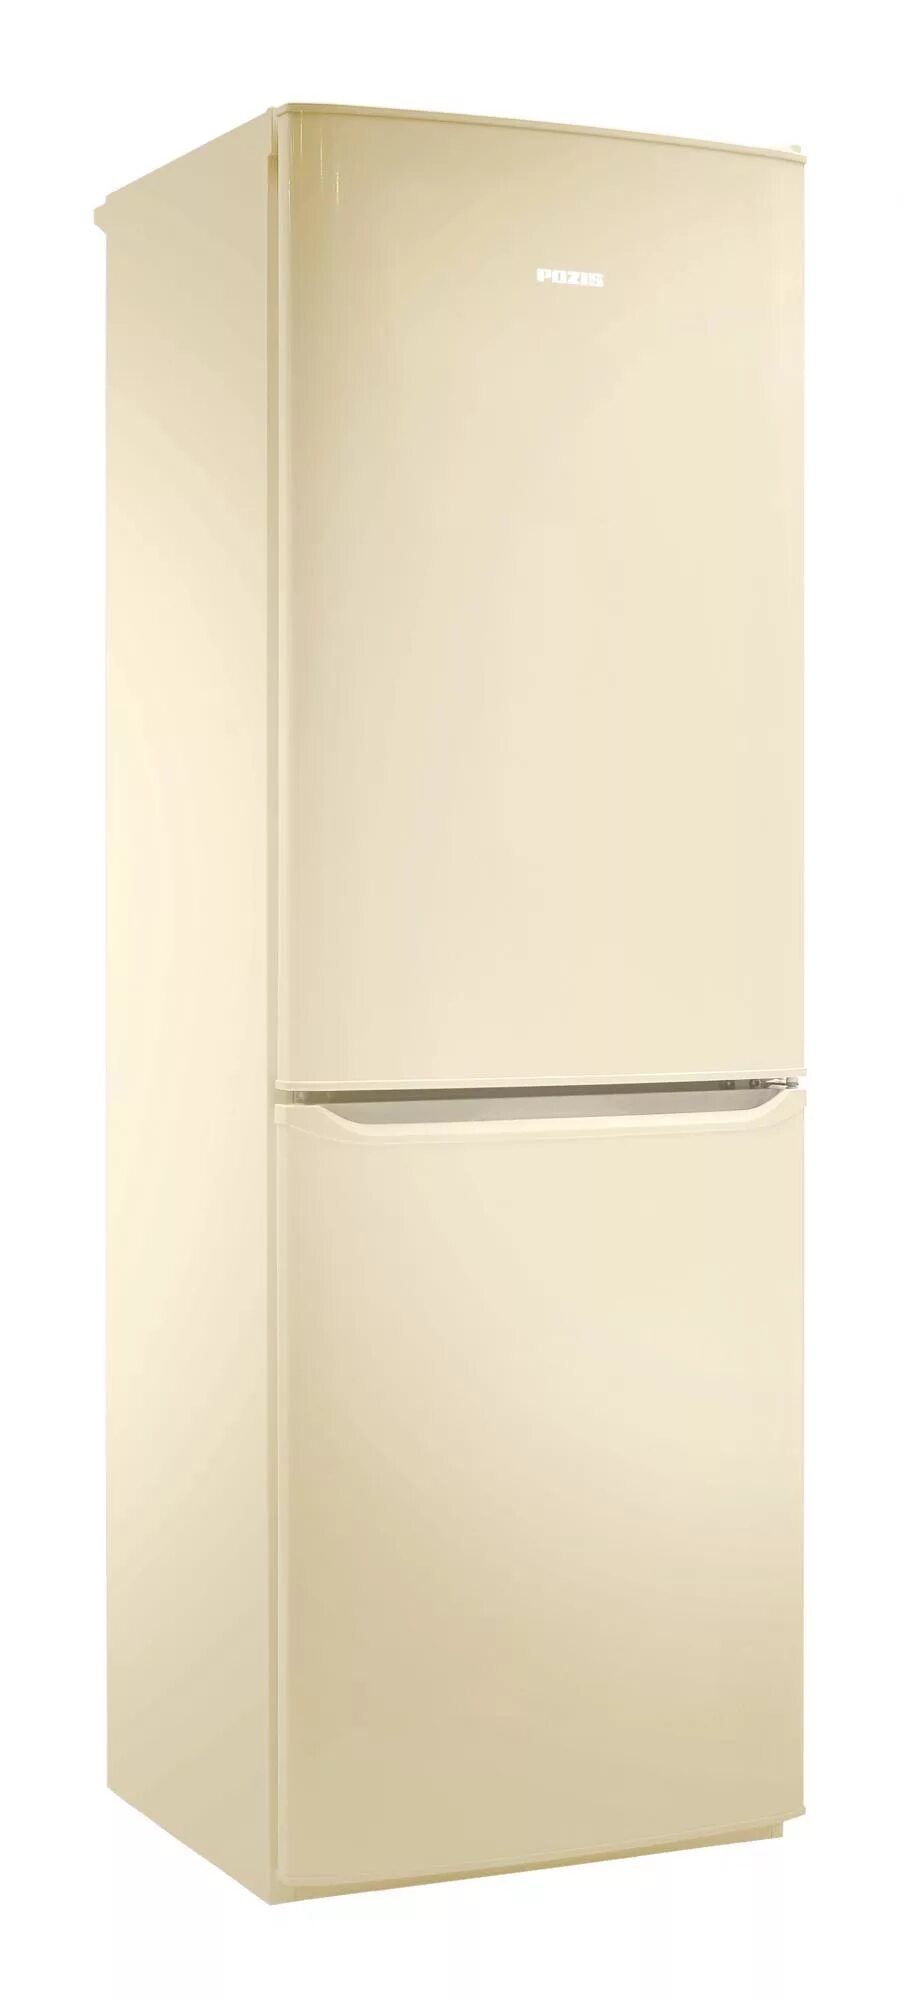 Pozis холодильник двухкамерный rk. Холодильник Pozis RK-102. Холодильник Позис RK 101. Холодильник NORDFROST CX 343-732. Pozis RK-102 А бежевый.